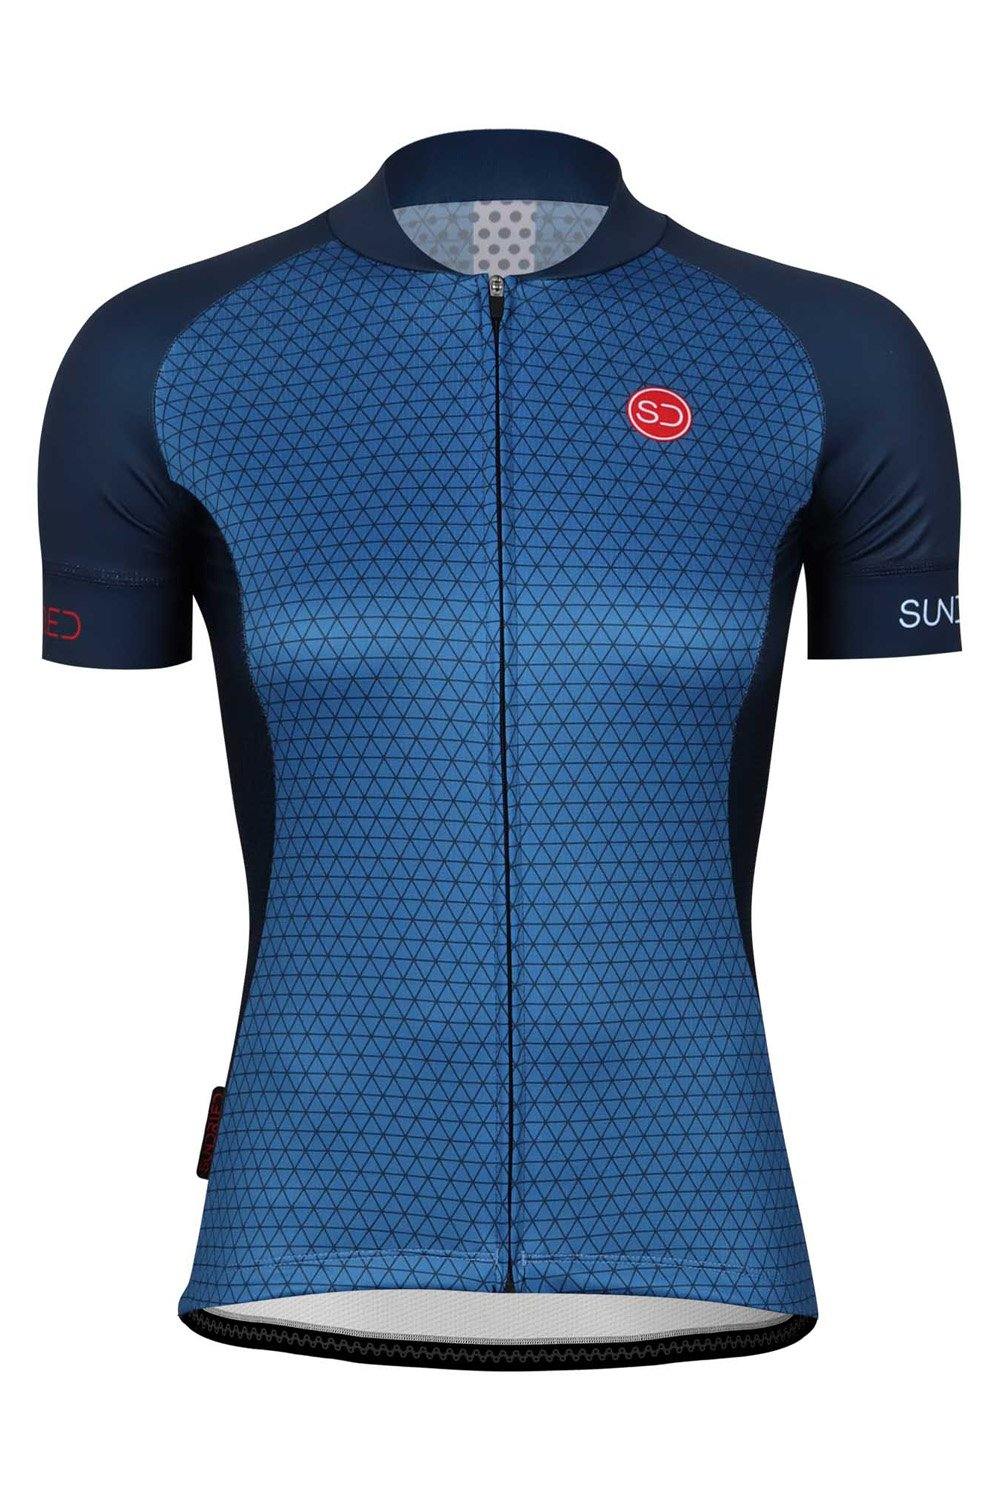 Sundried Drop Women's Short Sleeve Training Cycle Jersey Short Sleeve Jersey XXL Blue SD0335 XXL Blue Activewear